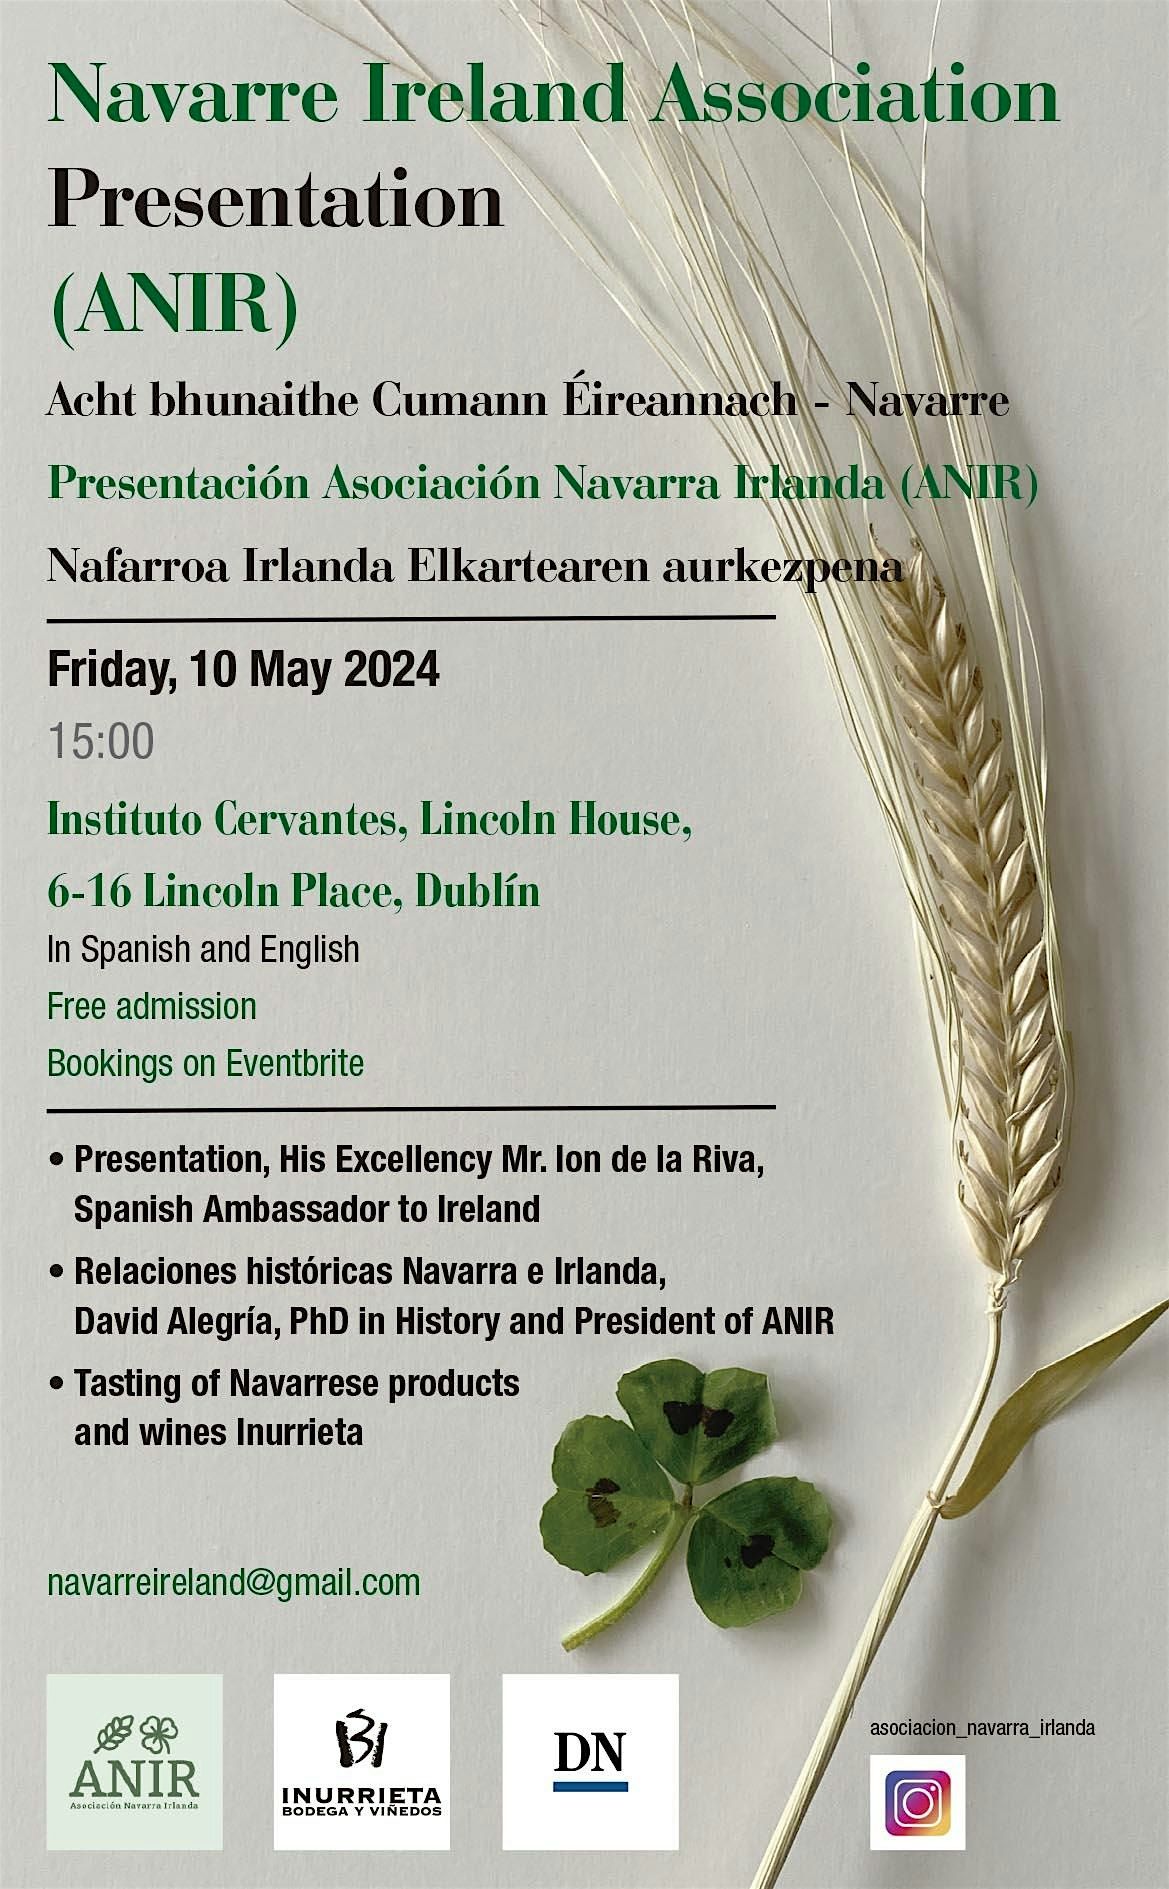 Navarre Ireland Association Presentation